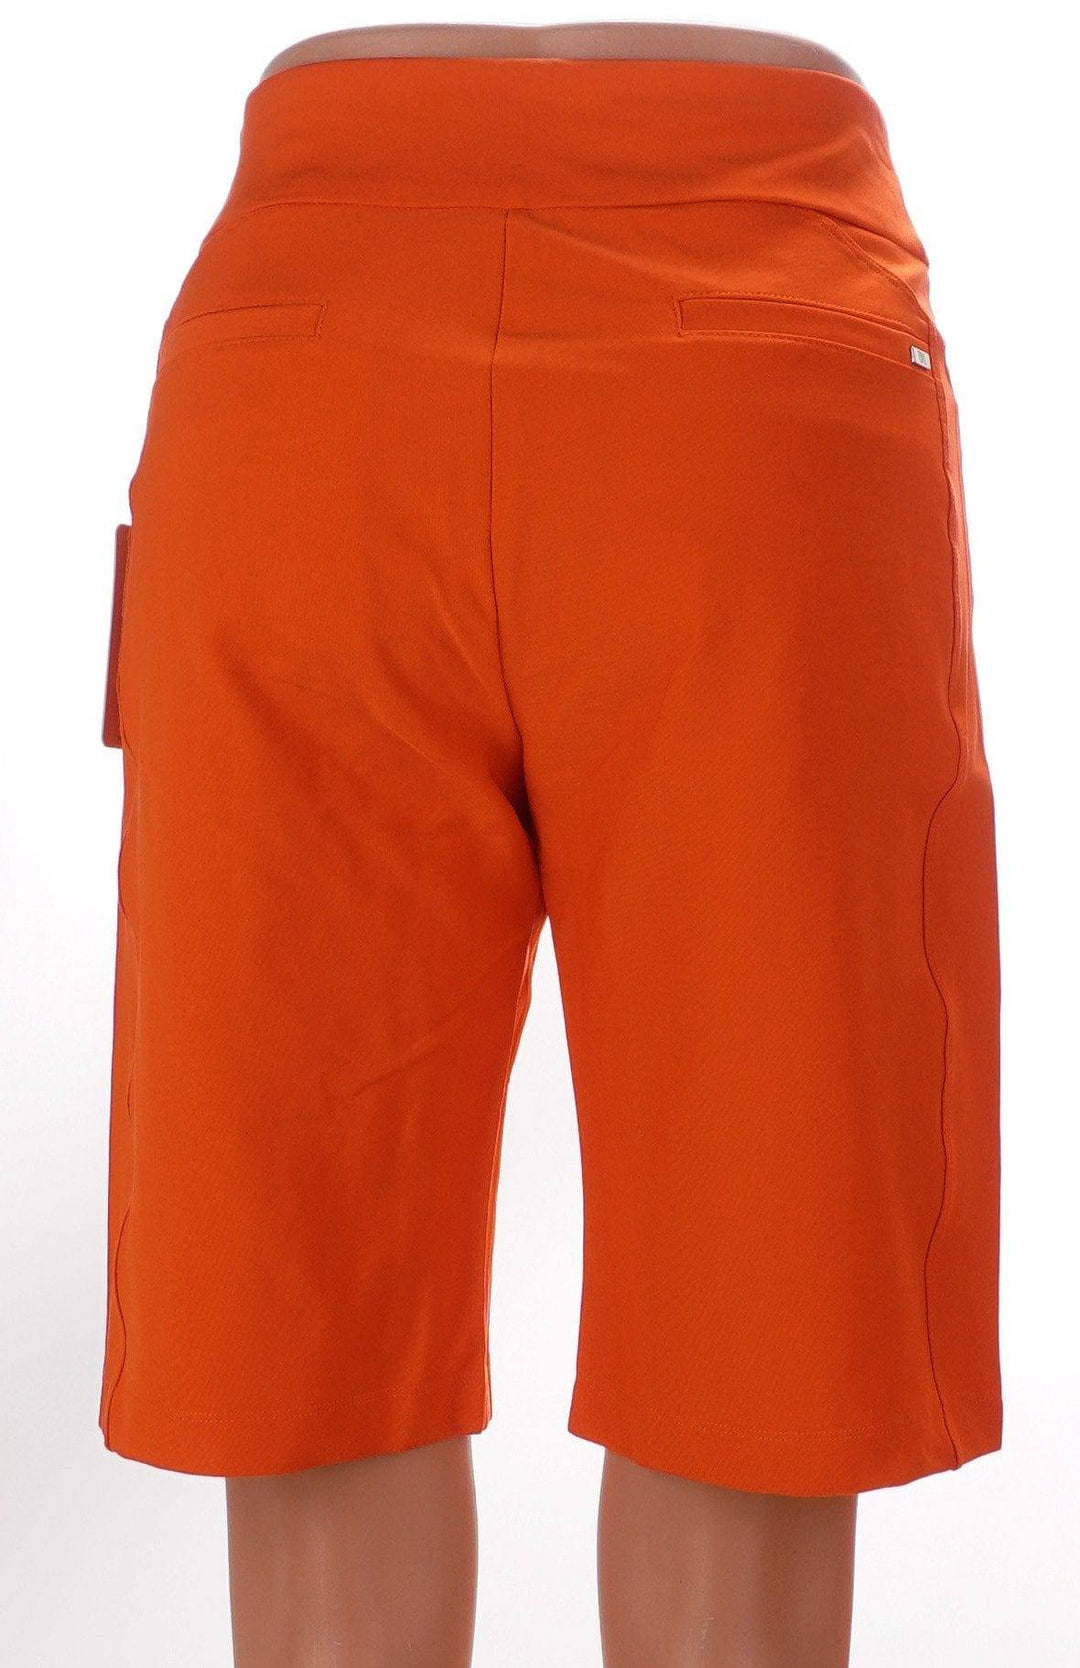 Tail Orange / 6 Tail Shorts - Modern Cherry Tomato - Size 6